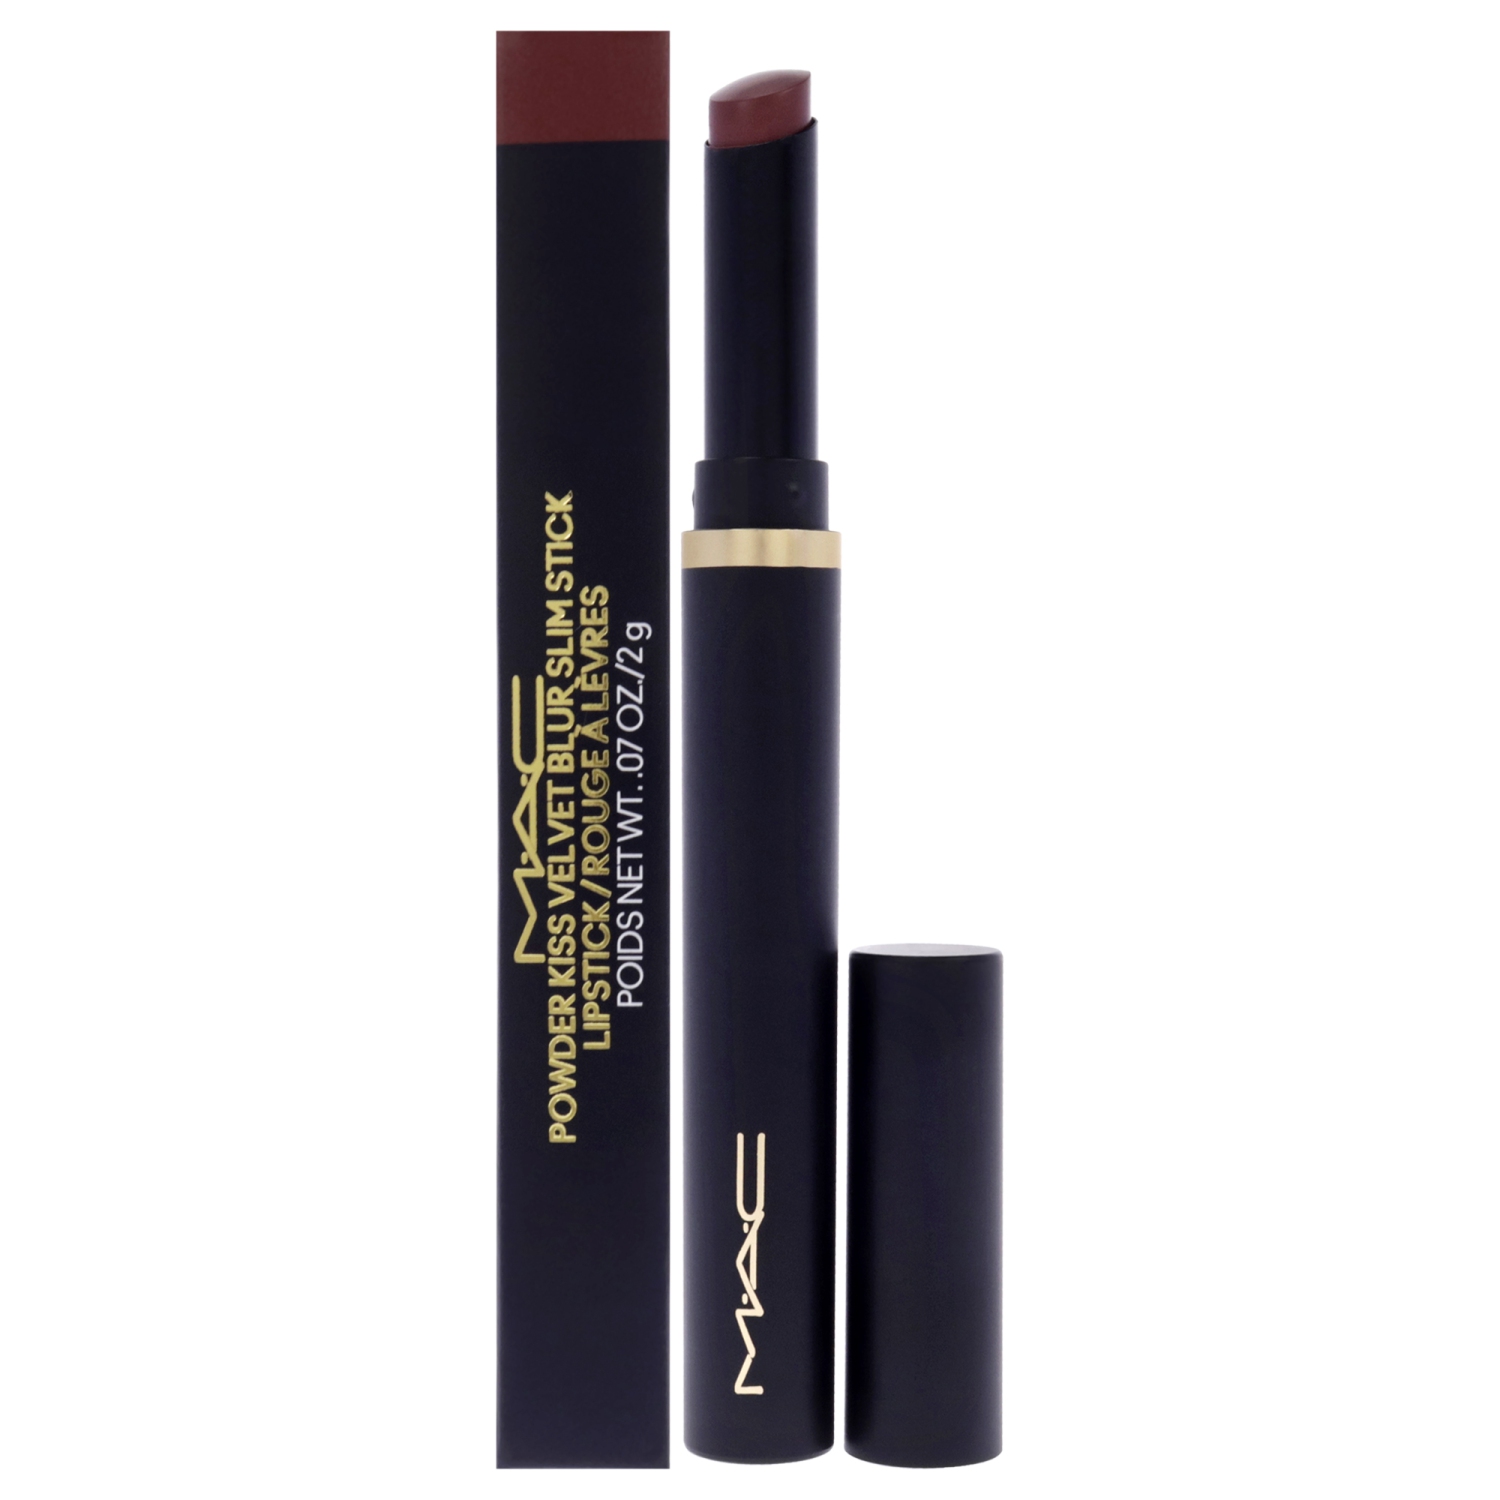 Powder Kiss Velvet Blur Slim Stick - Rose Mary by MAC for Women - 0.7 oz Lipstick